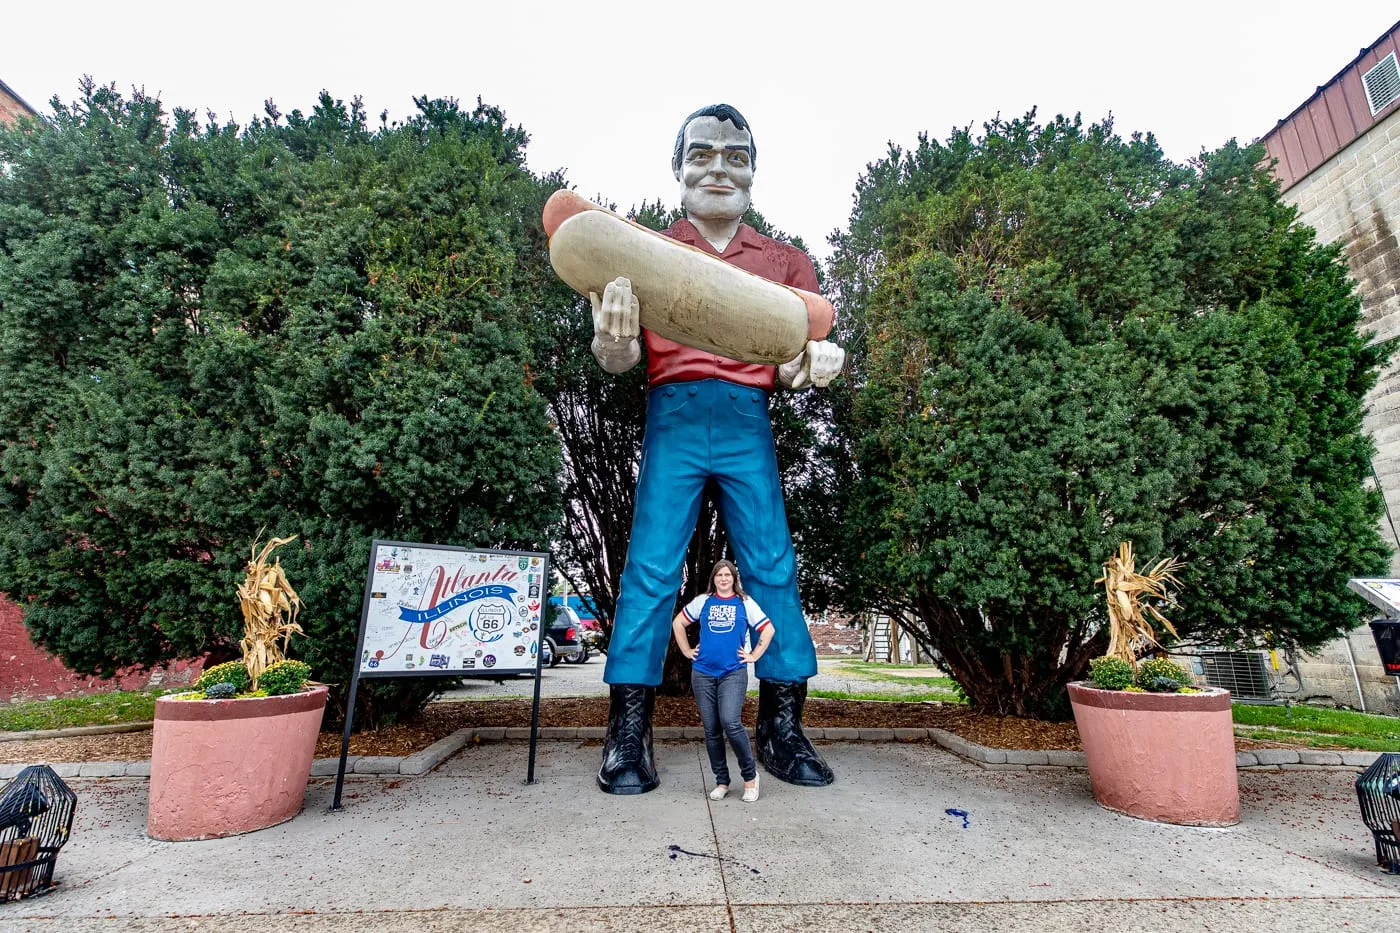 Paul Bunyon Muffler Man Holding a Hot Dog in Atlanta, Illinois - Route 66 Roadside attraction